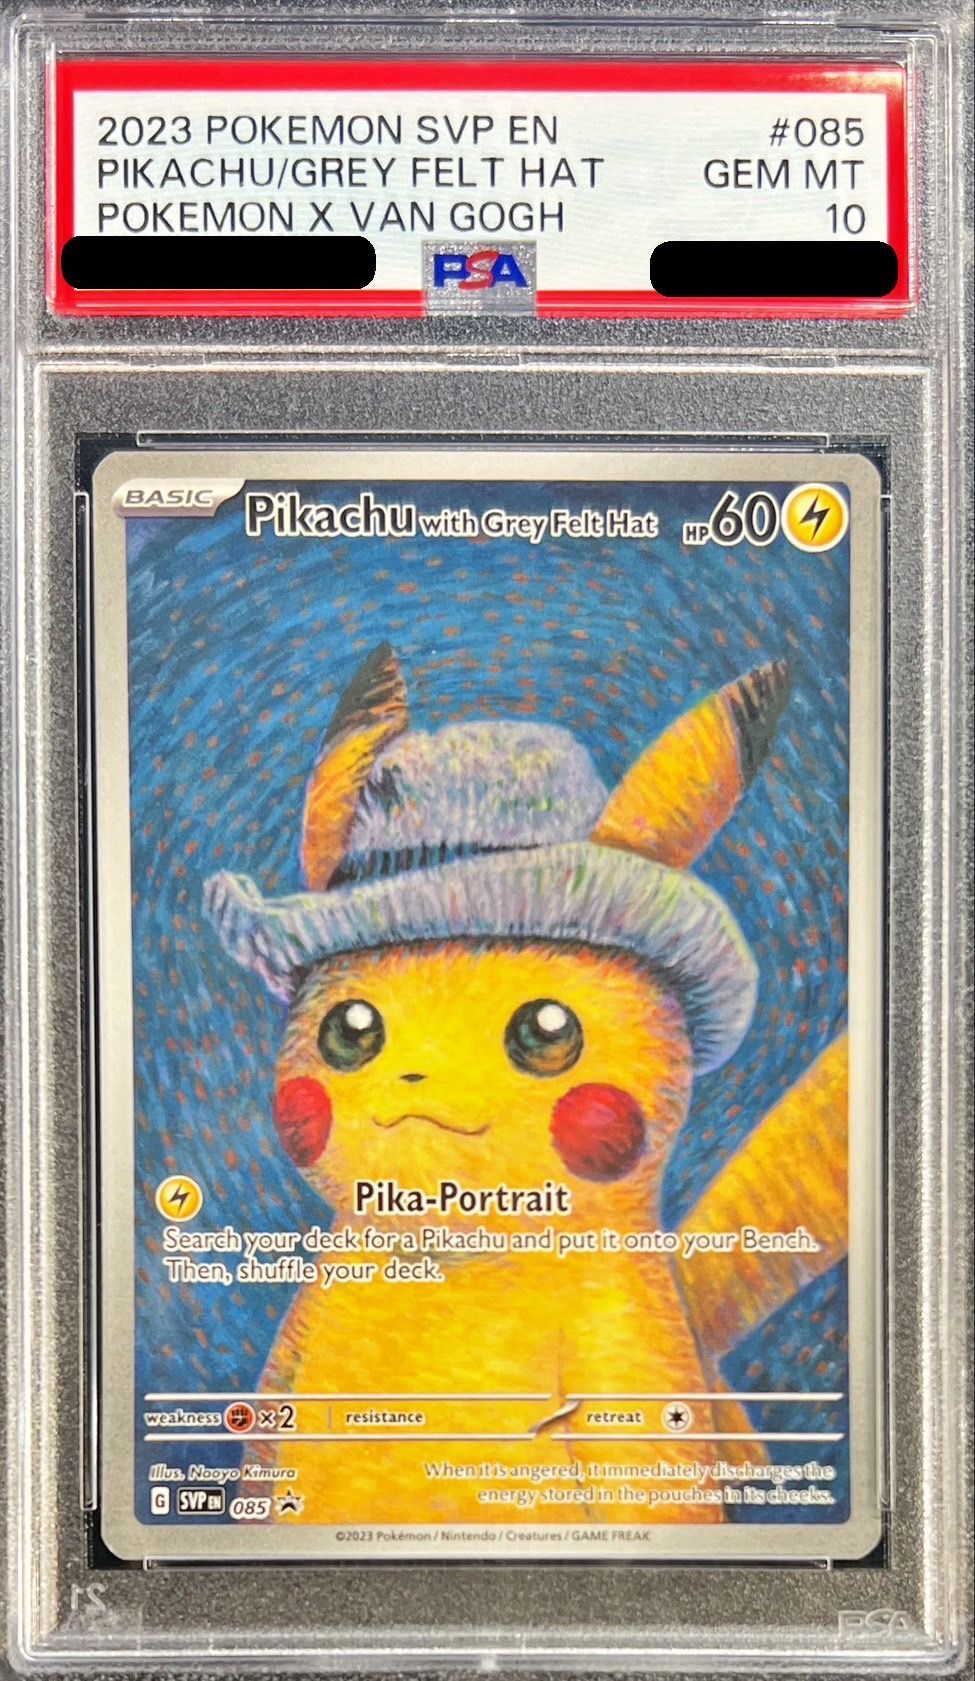 〔PSA10鑑定済〕Pikachu with Grey Felt Hat(ゴッホピカチュウ)【P】{085/SV-P}